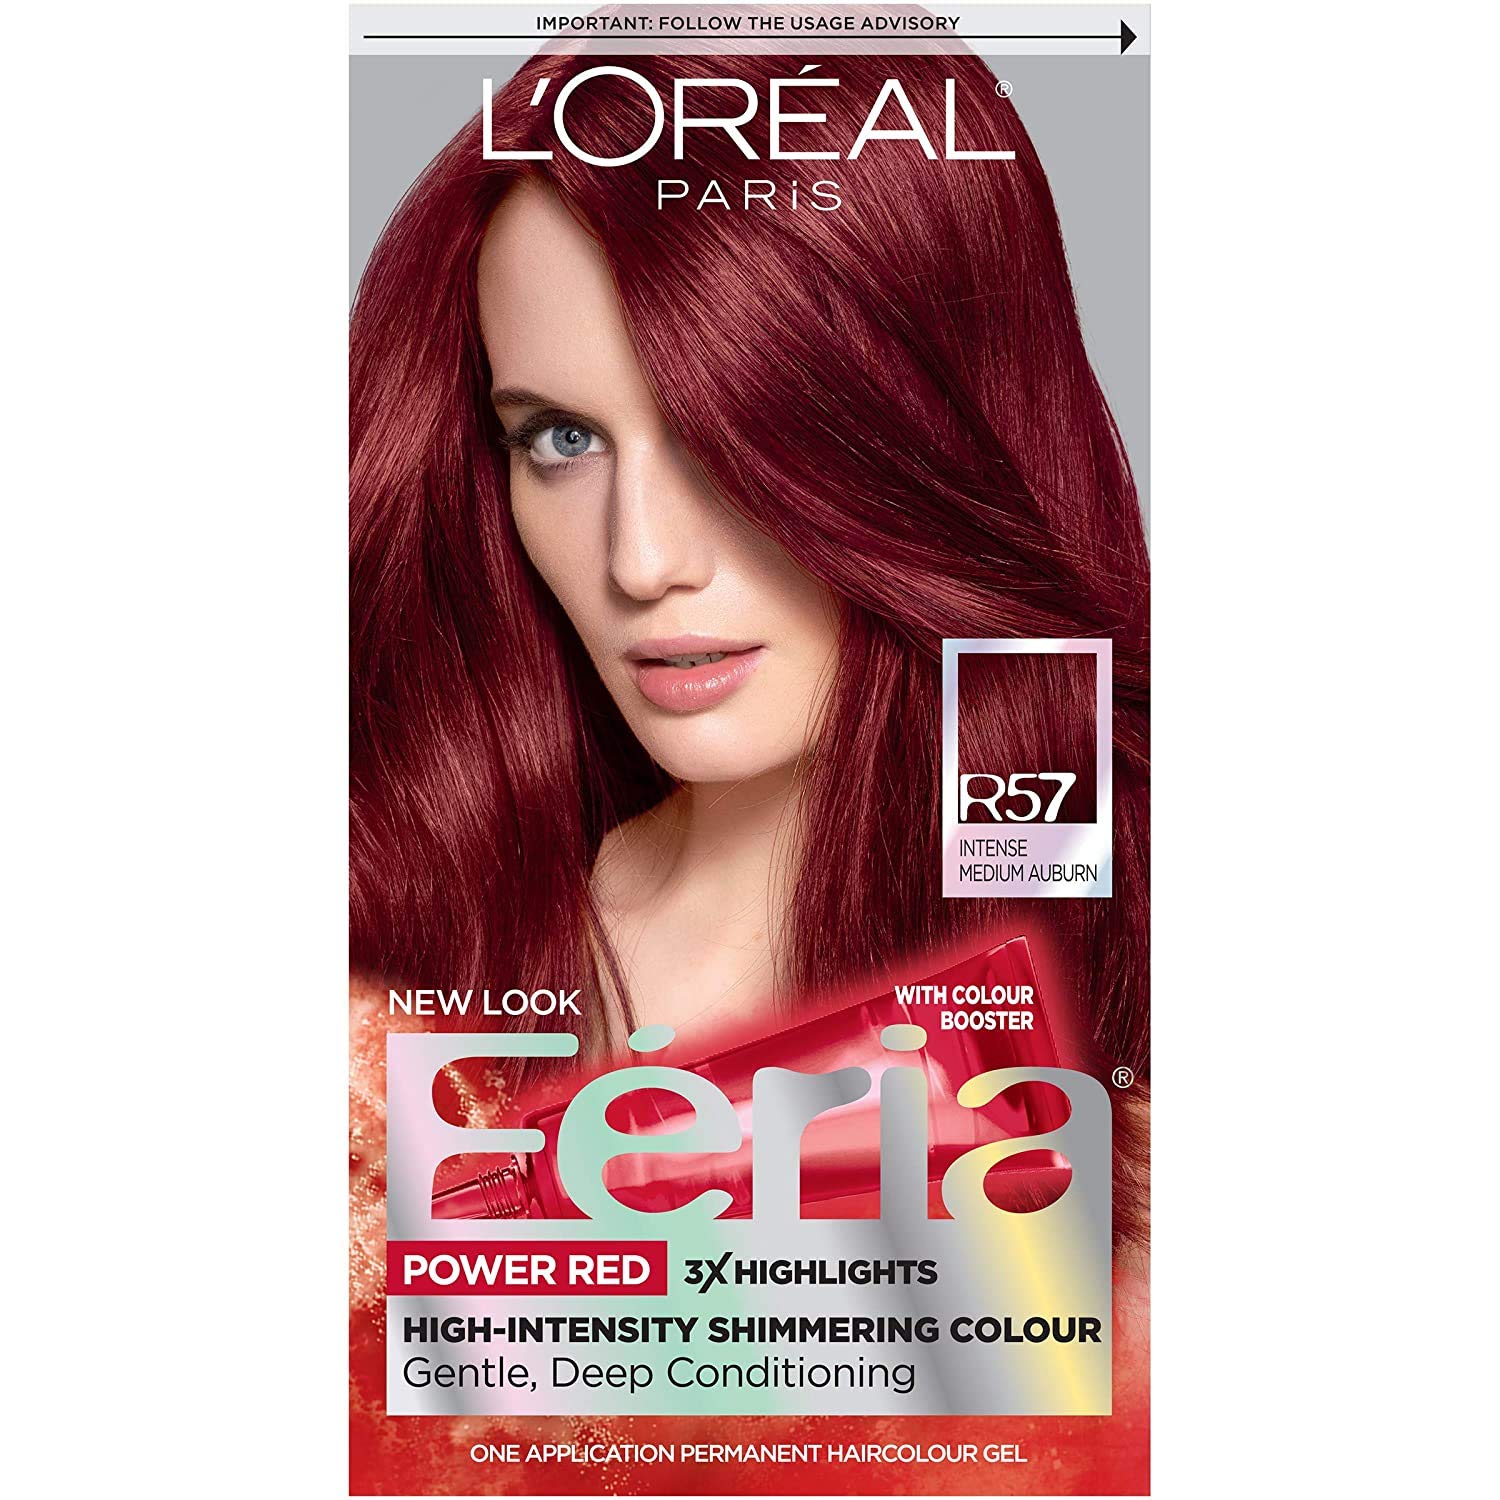 Mua L'Oreal Paris Feria Multi-Faceted Shimmering Permanent Hair Color, R57  Cherry Crush (Intense Medium Auburn), Pack of 1, Hair Dye trên Amazon Mỹ  chính hãng 2023 | Giaonhan247